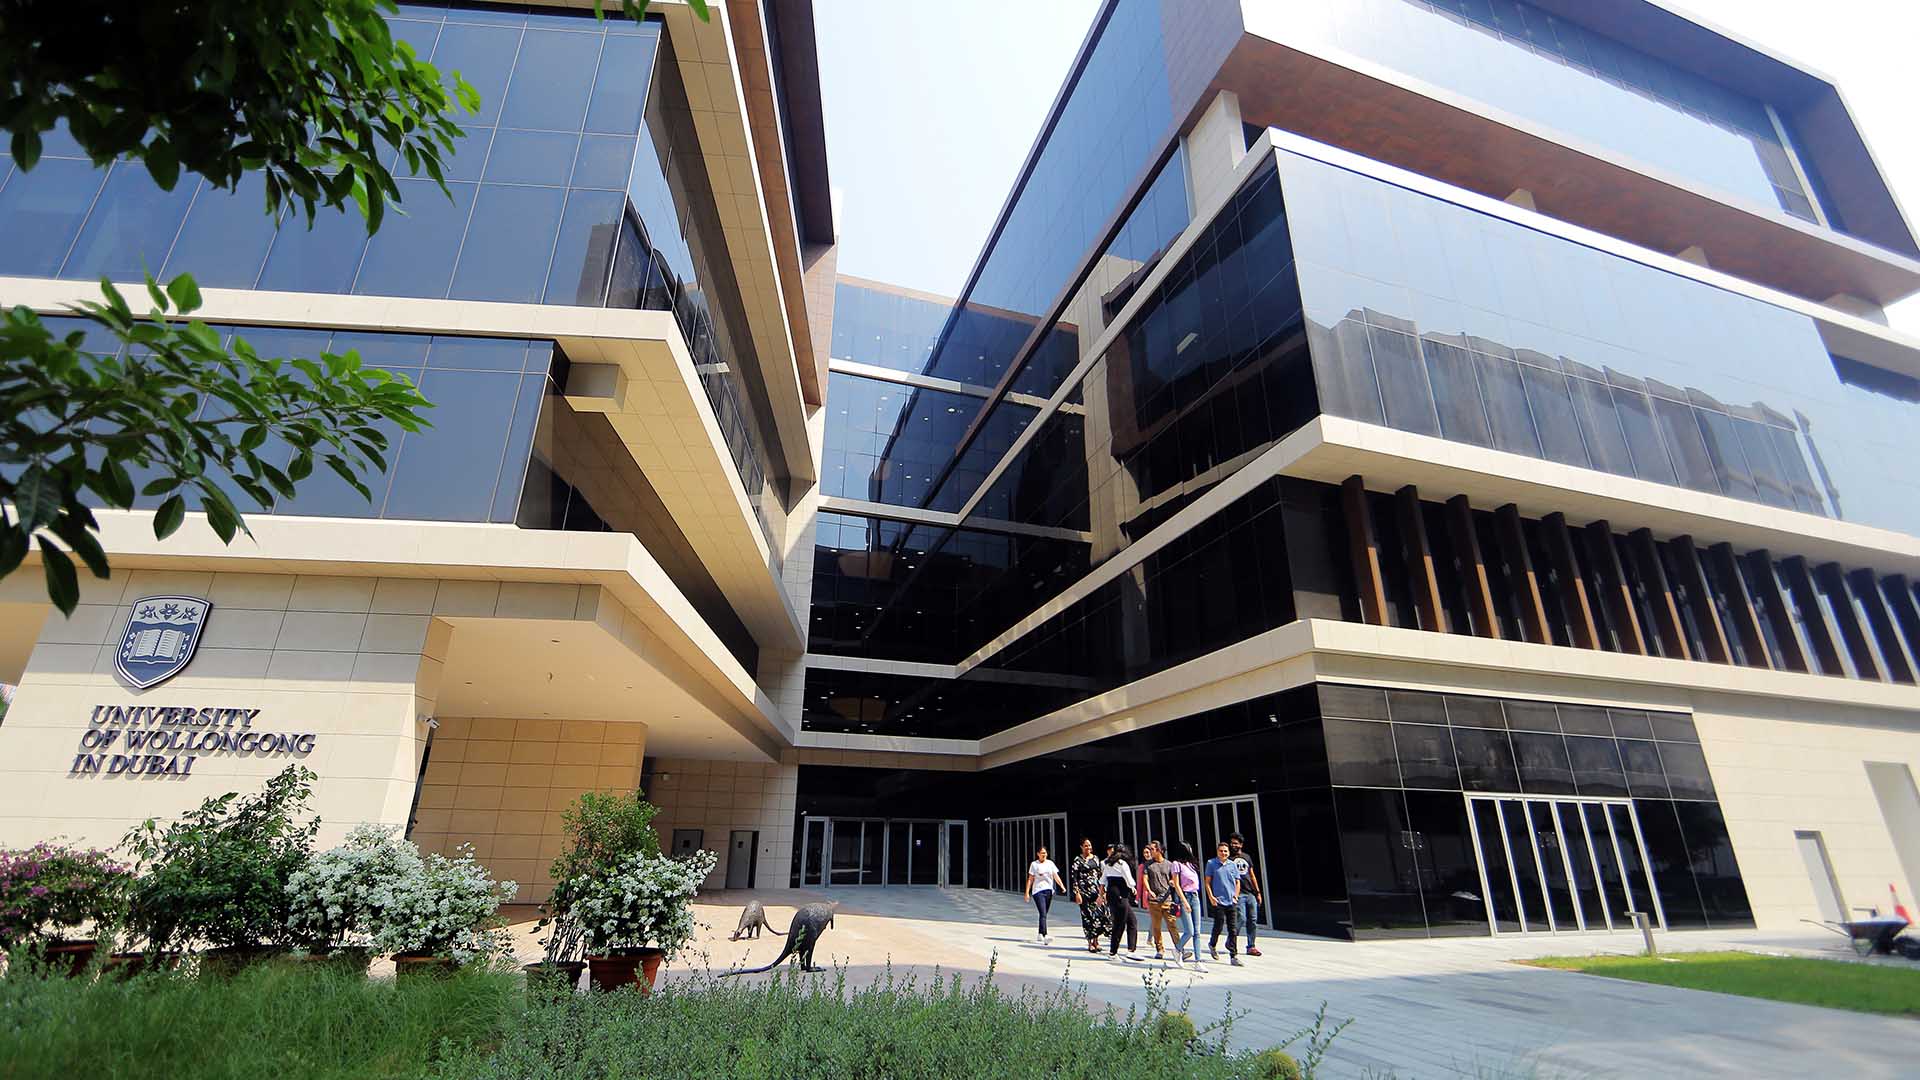 2022 ViceChancellor opens Dubai’s ‘Campus of the Future’ University